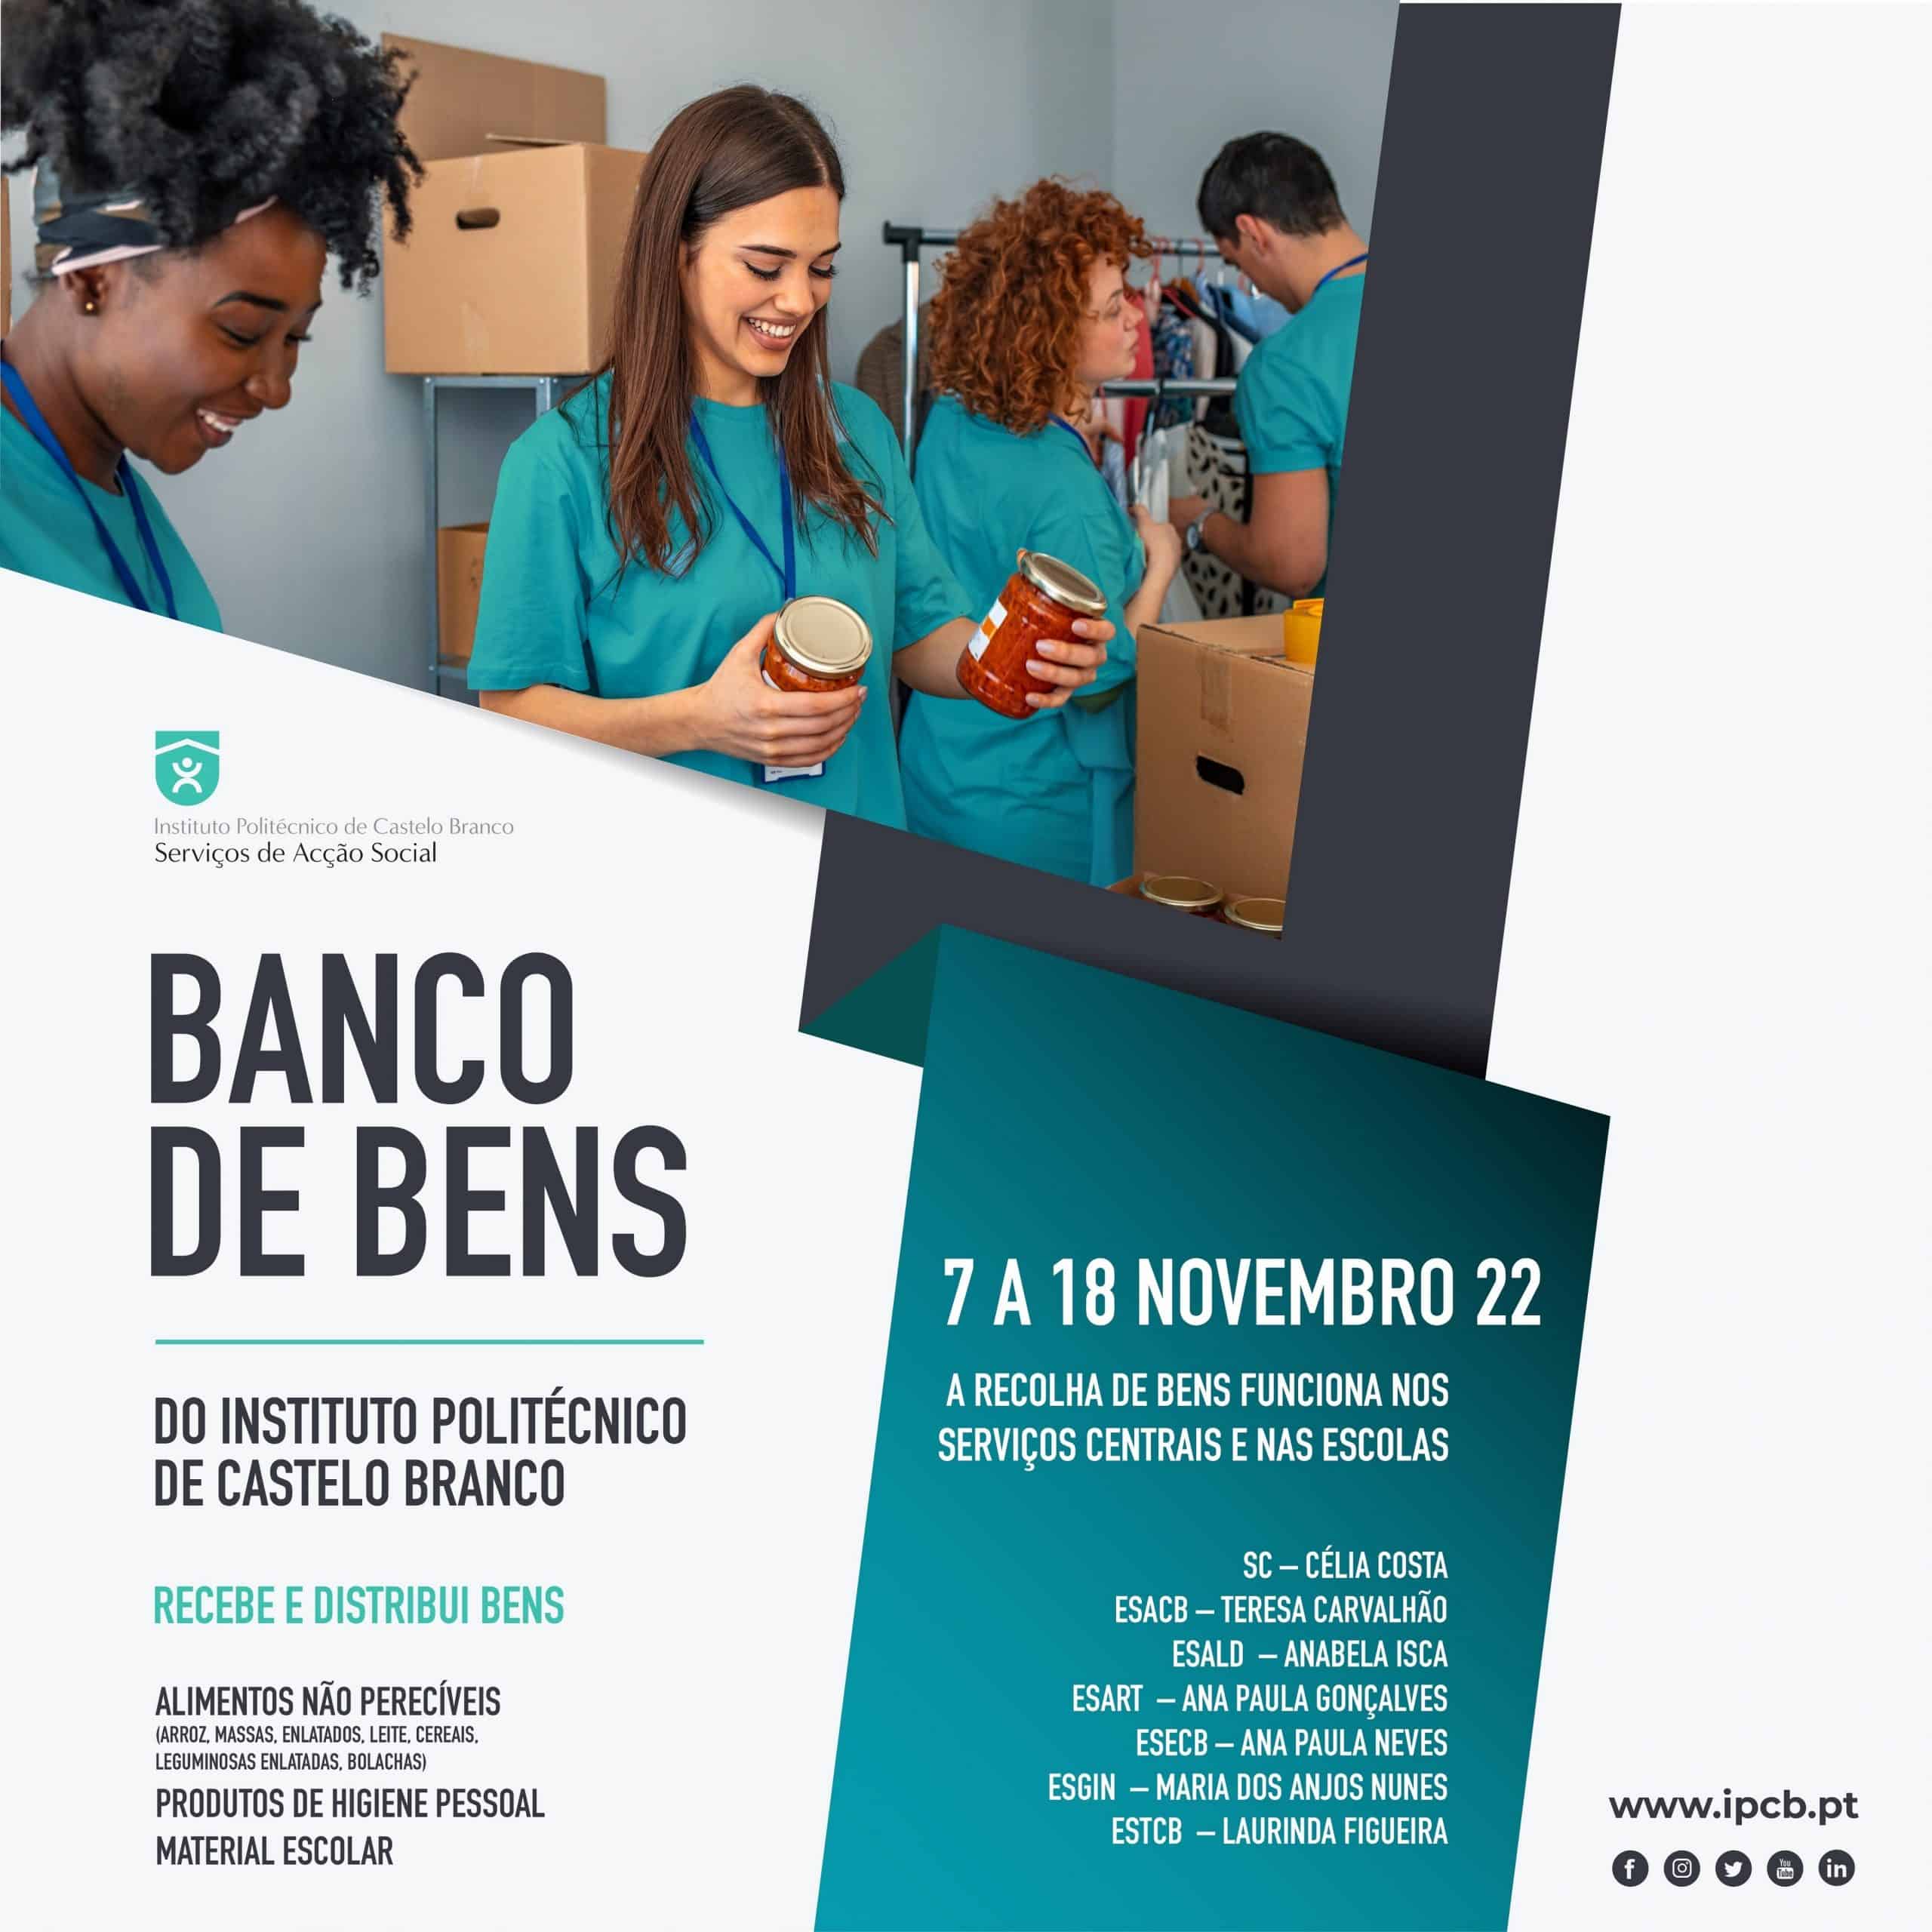 Politécnico de Castelo Branco promove nova recolha para o Banco de Bens